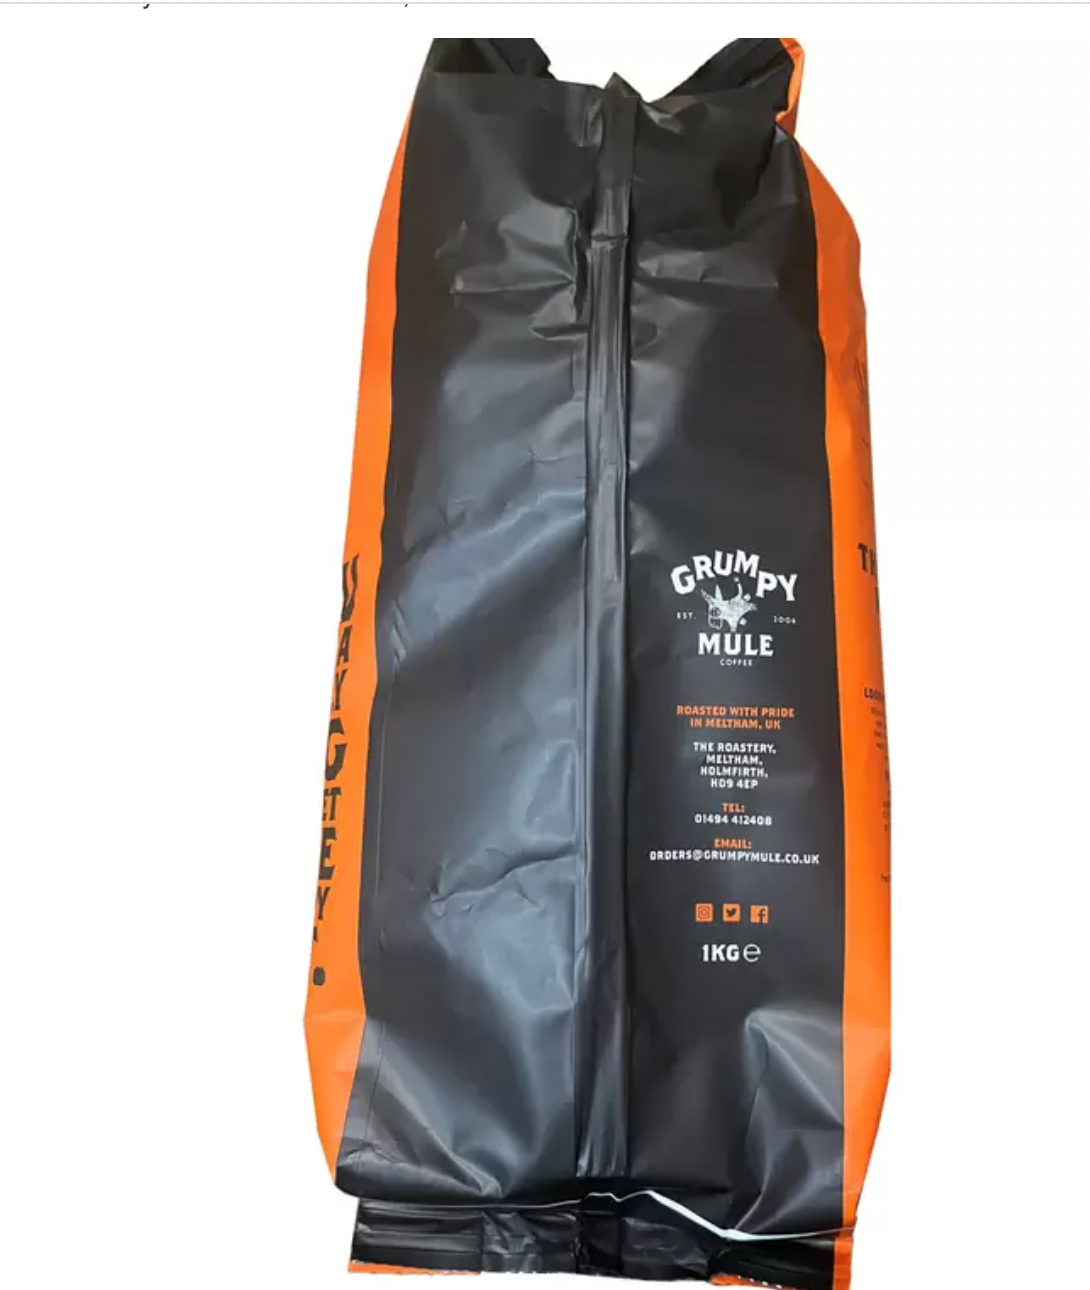 Grumpy Mule Dark Peak Coffee Beans, 1kg: Embrace Richness in Every Sip with Our Premium Dark Roast Blend